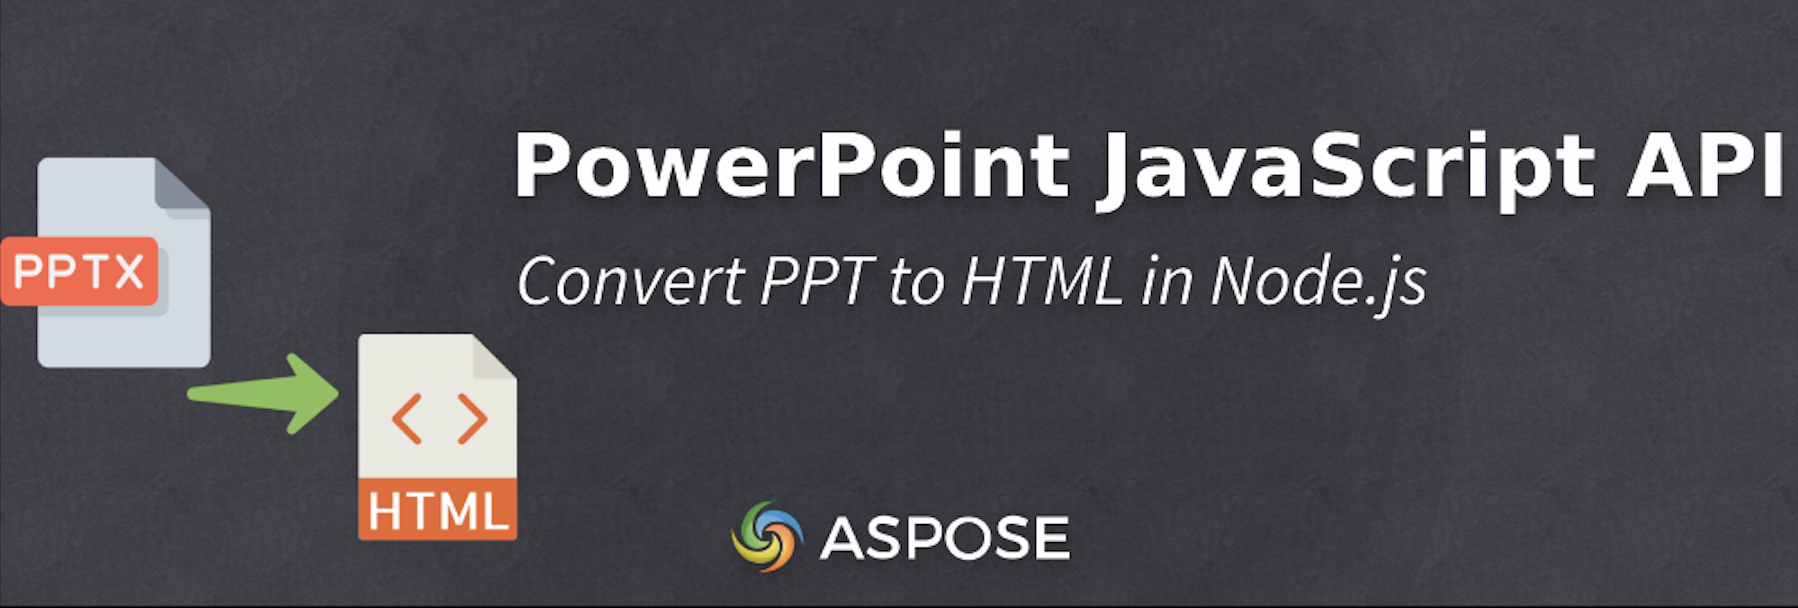 המרת PPT ל-HTML ב-Node.js - PowerPoint JavaScript API